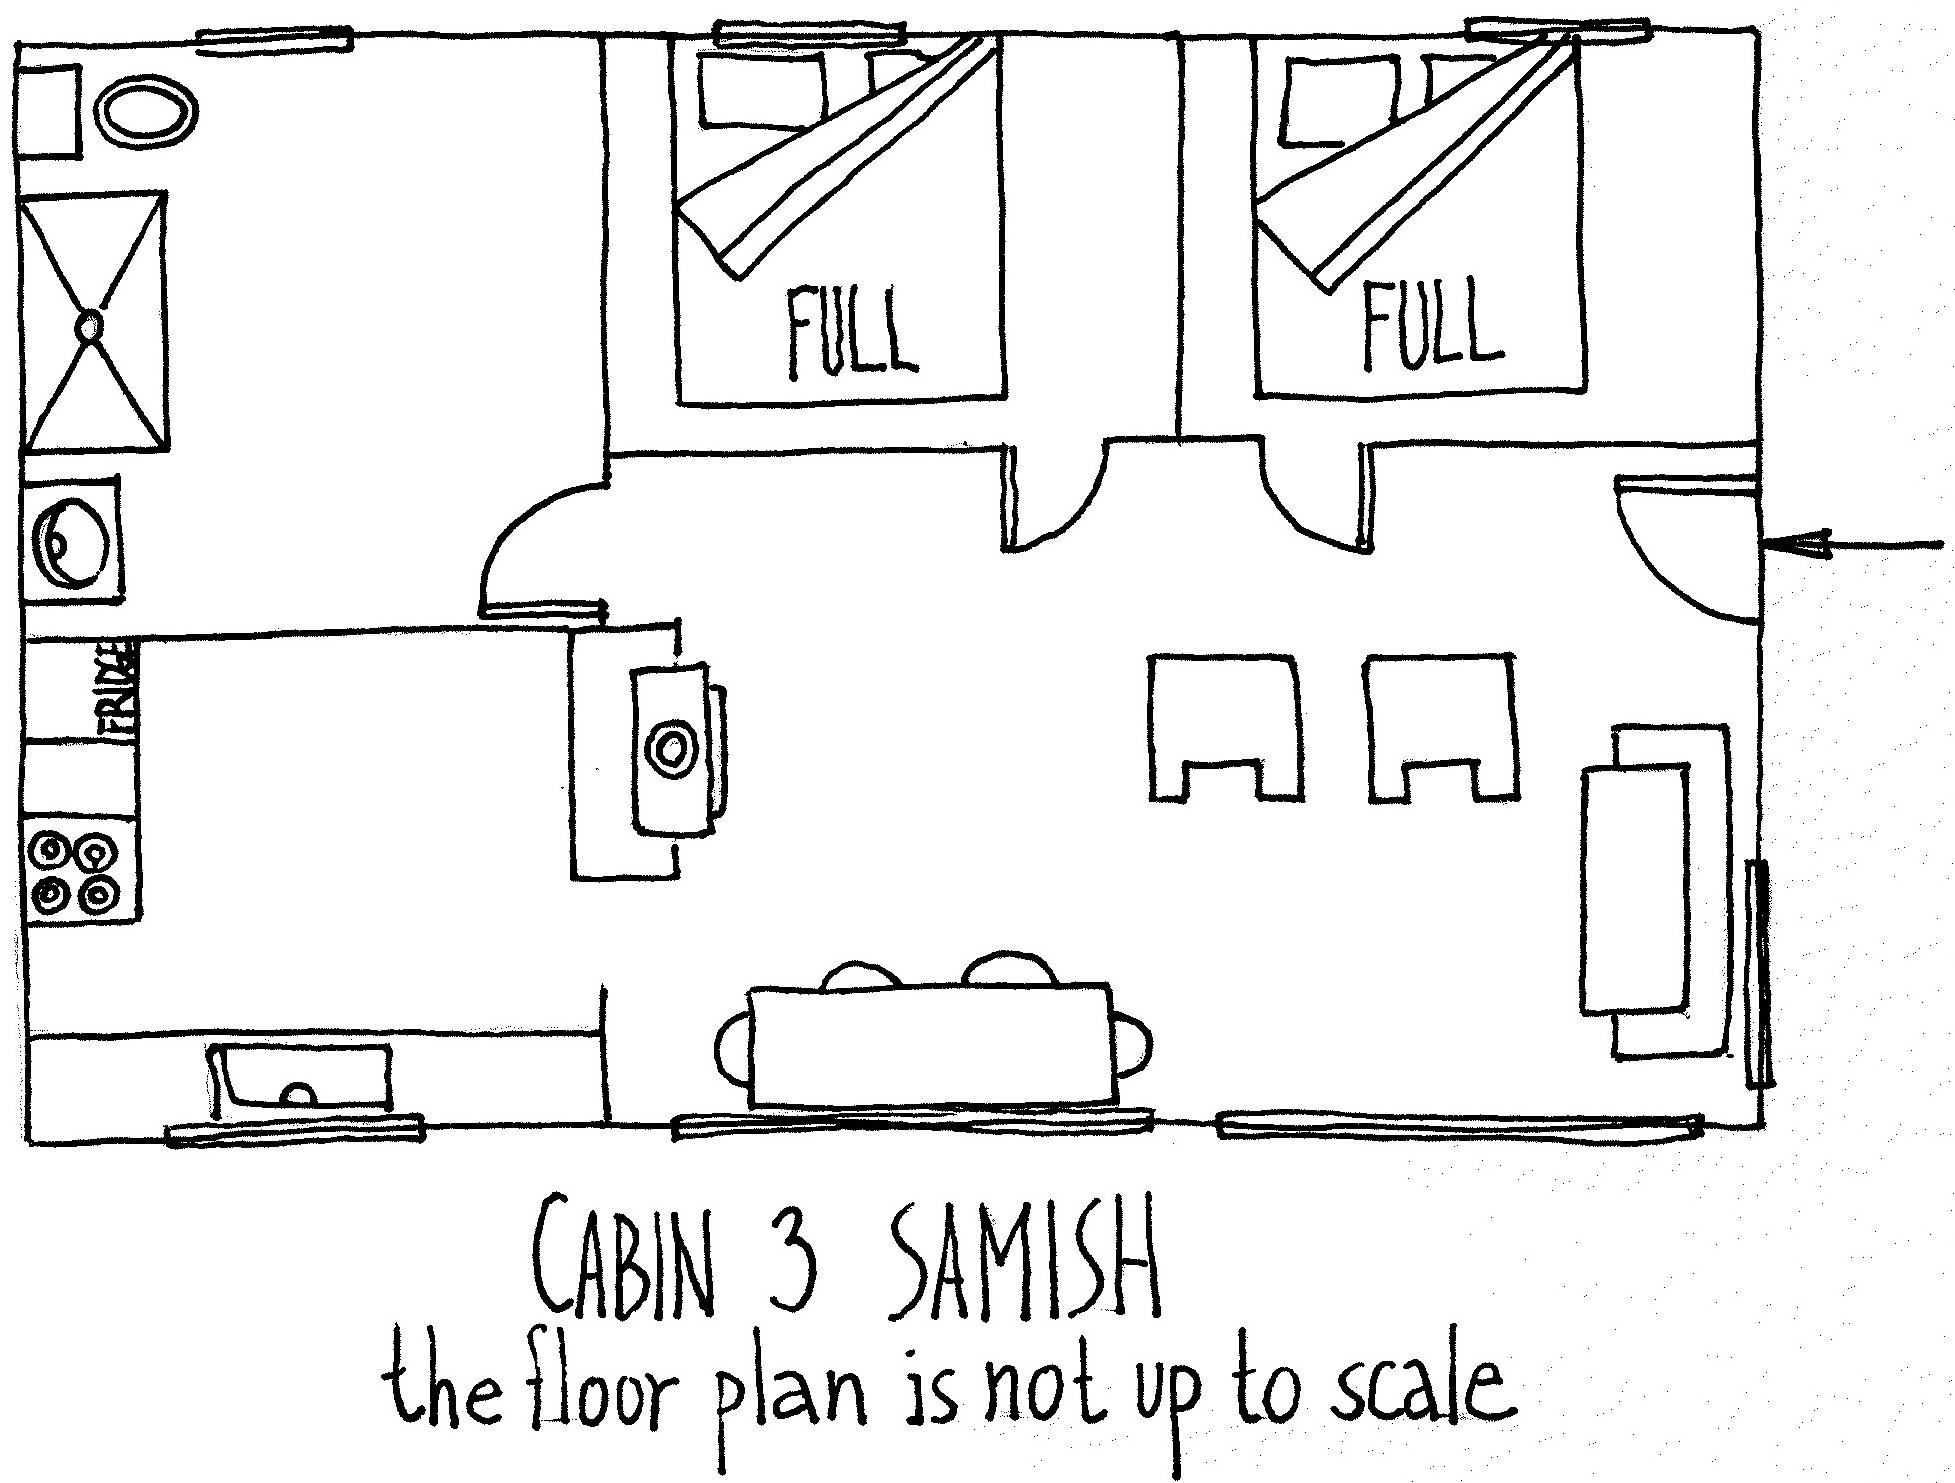 GIR Samish Floorplan.jpg